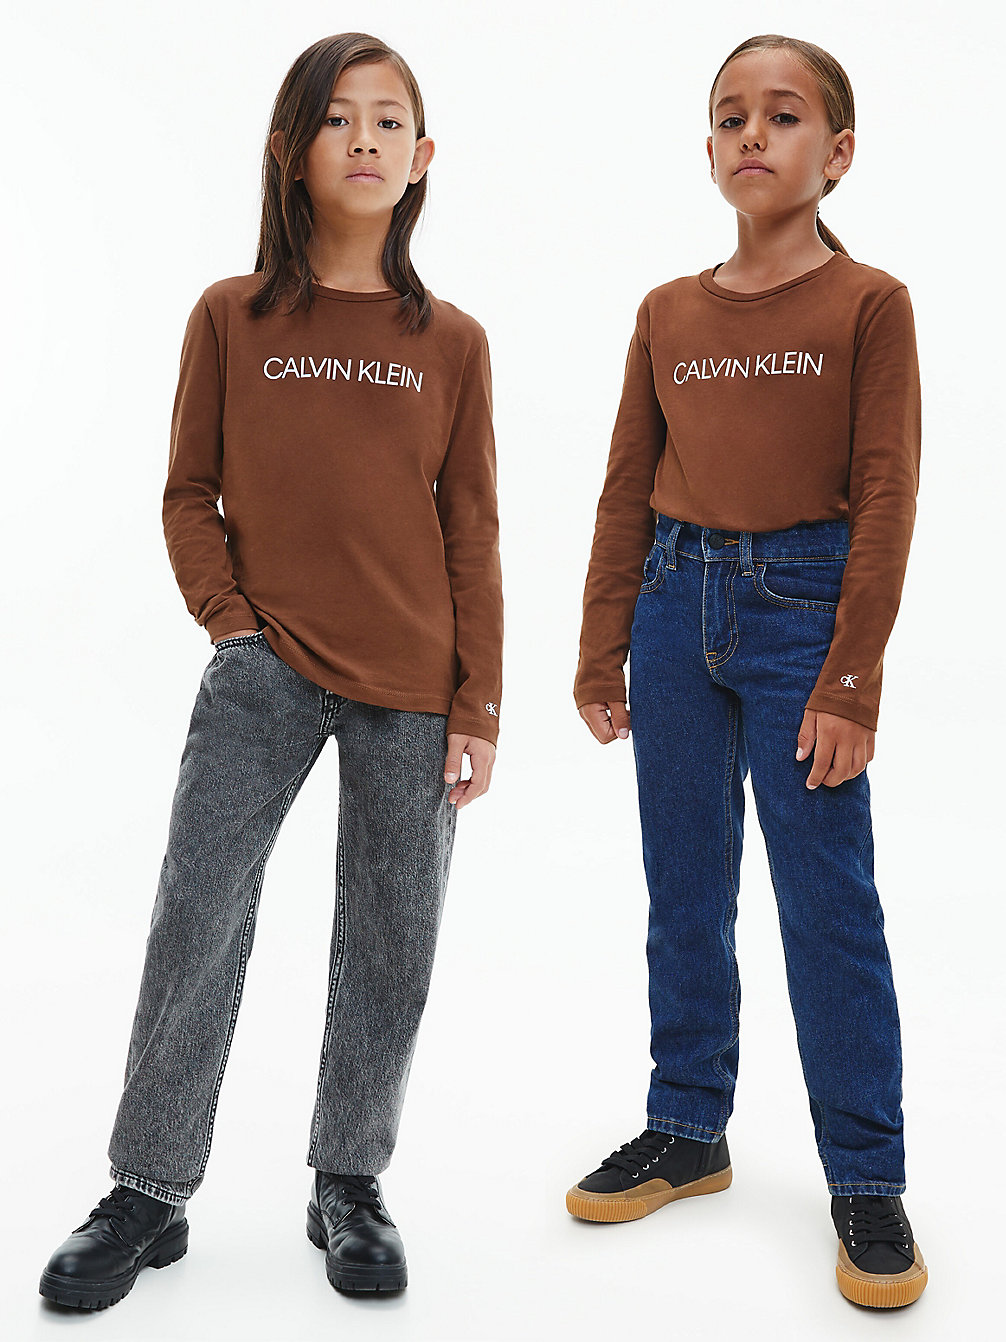 MILK CHOCOLATE Unisex Long Sleeve T-Shirt undefined kids unisex Calvin Klein